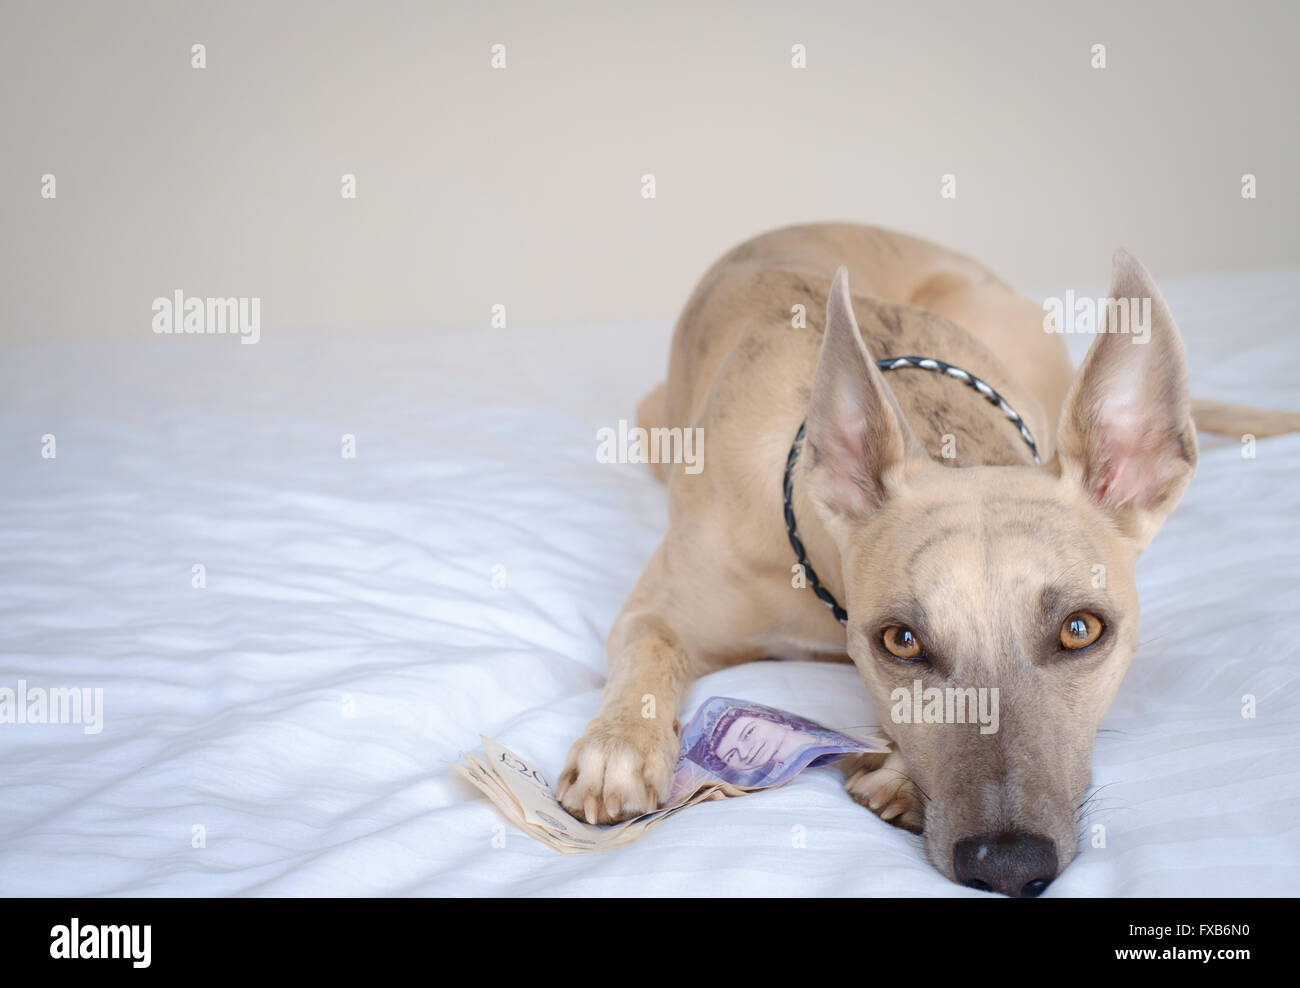 Dog with large sum of money looking sad Stock Photo